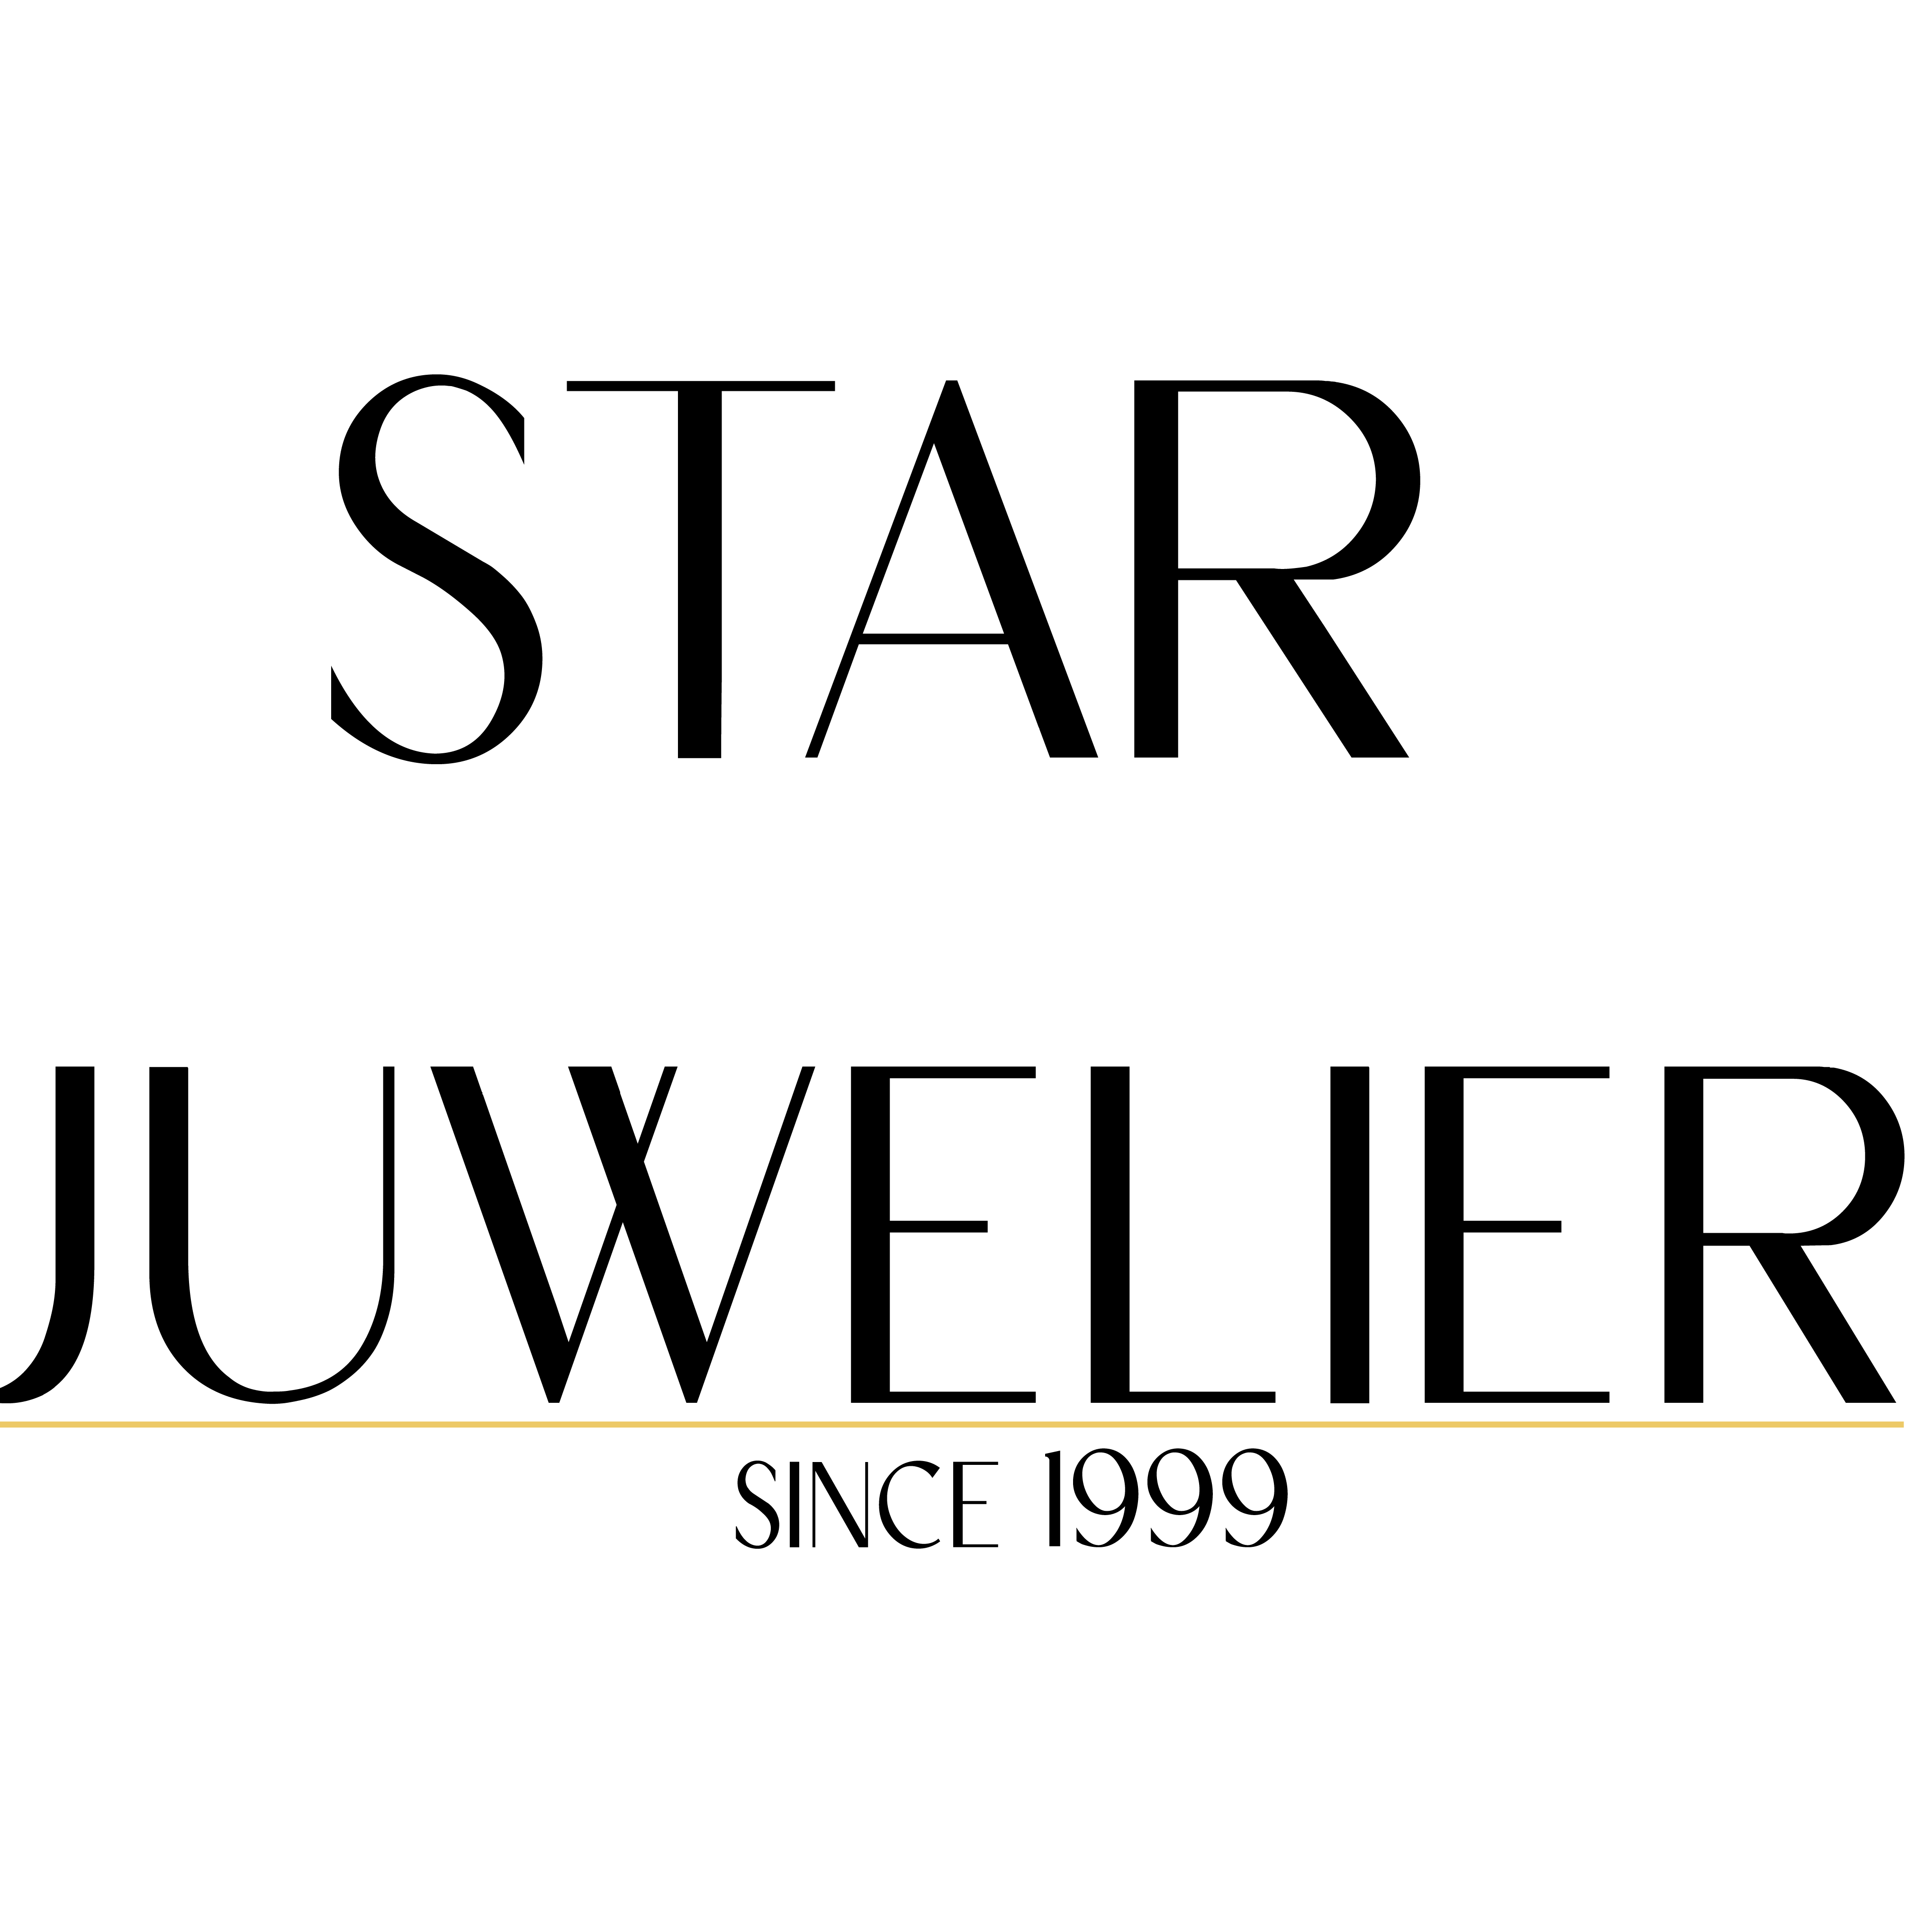 Star Juwelier